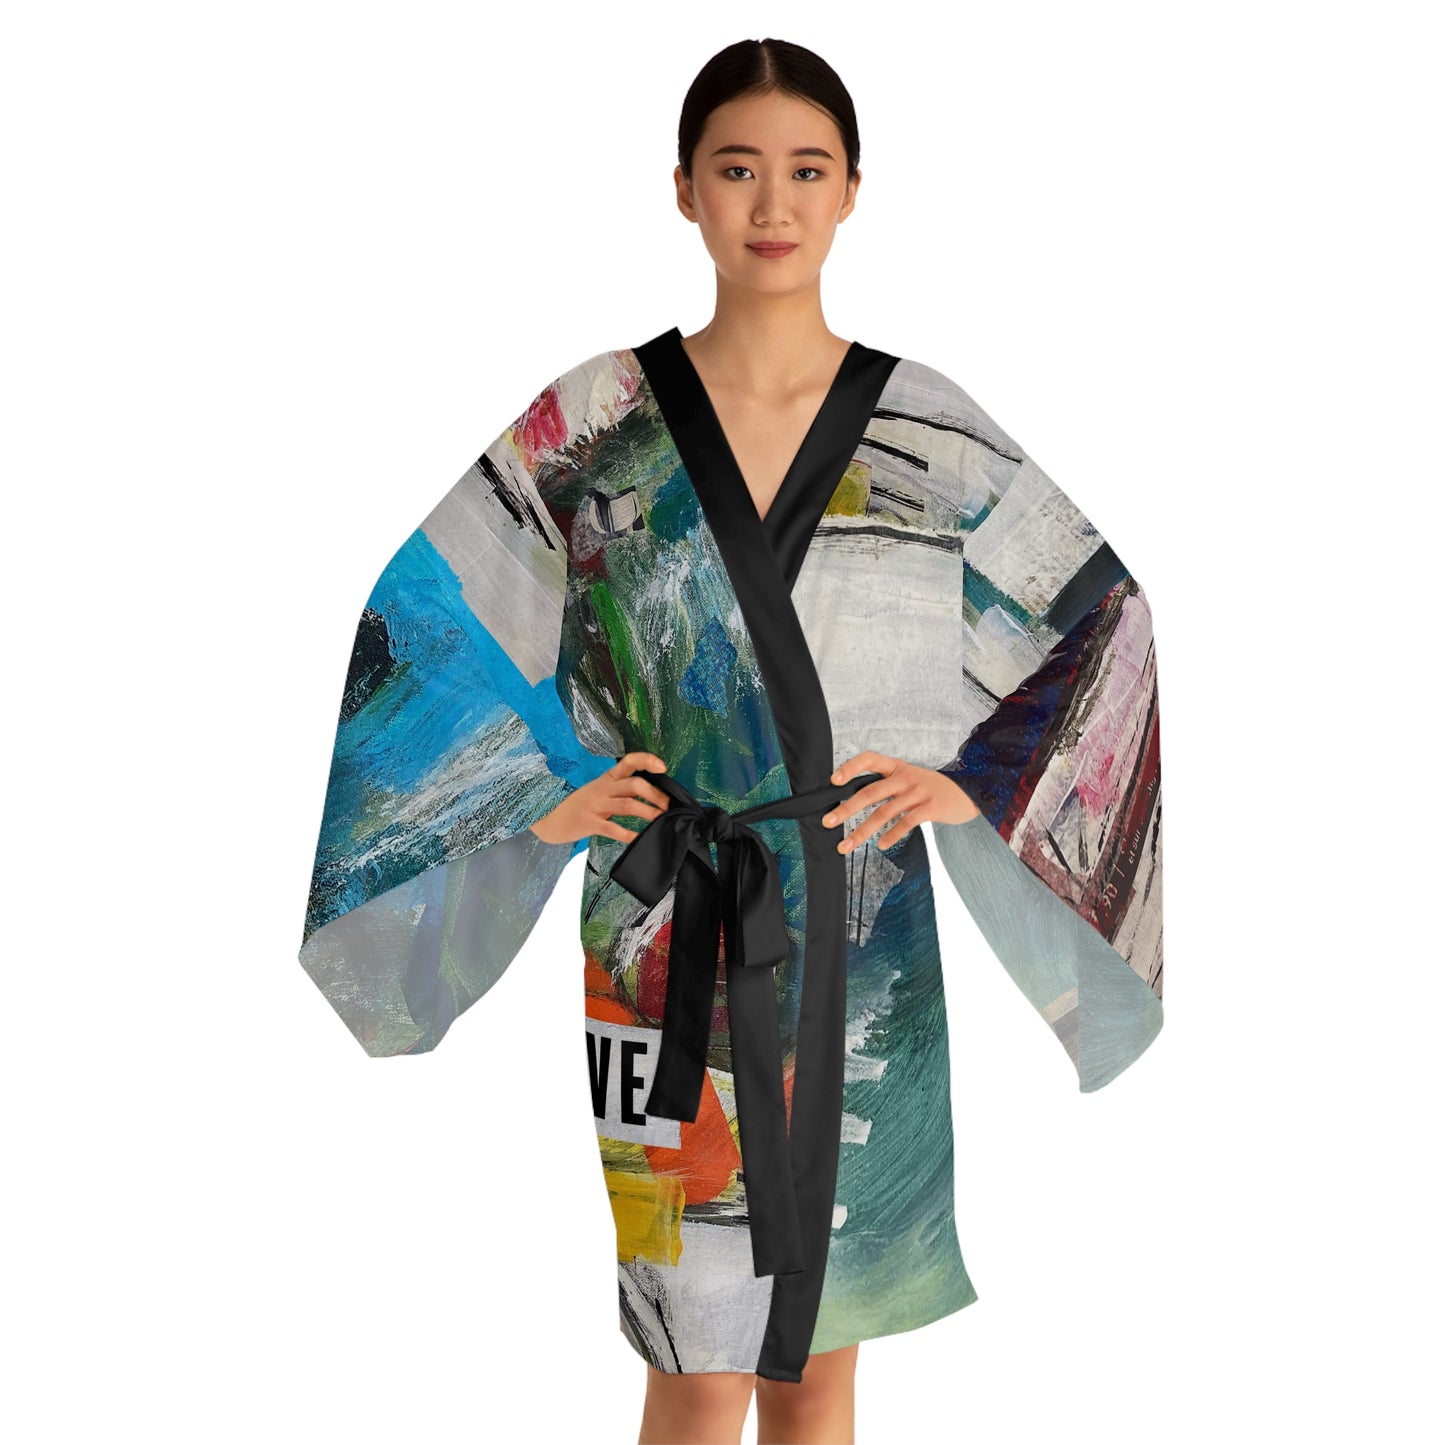 LOVE LETTERS Long Sleeve Japanese Style Kimono Robe